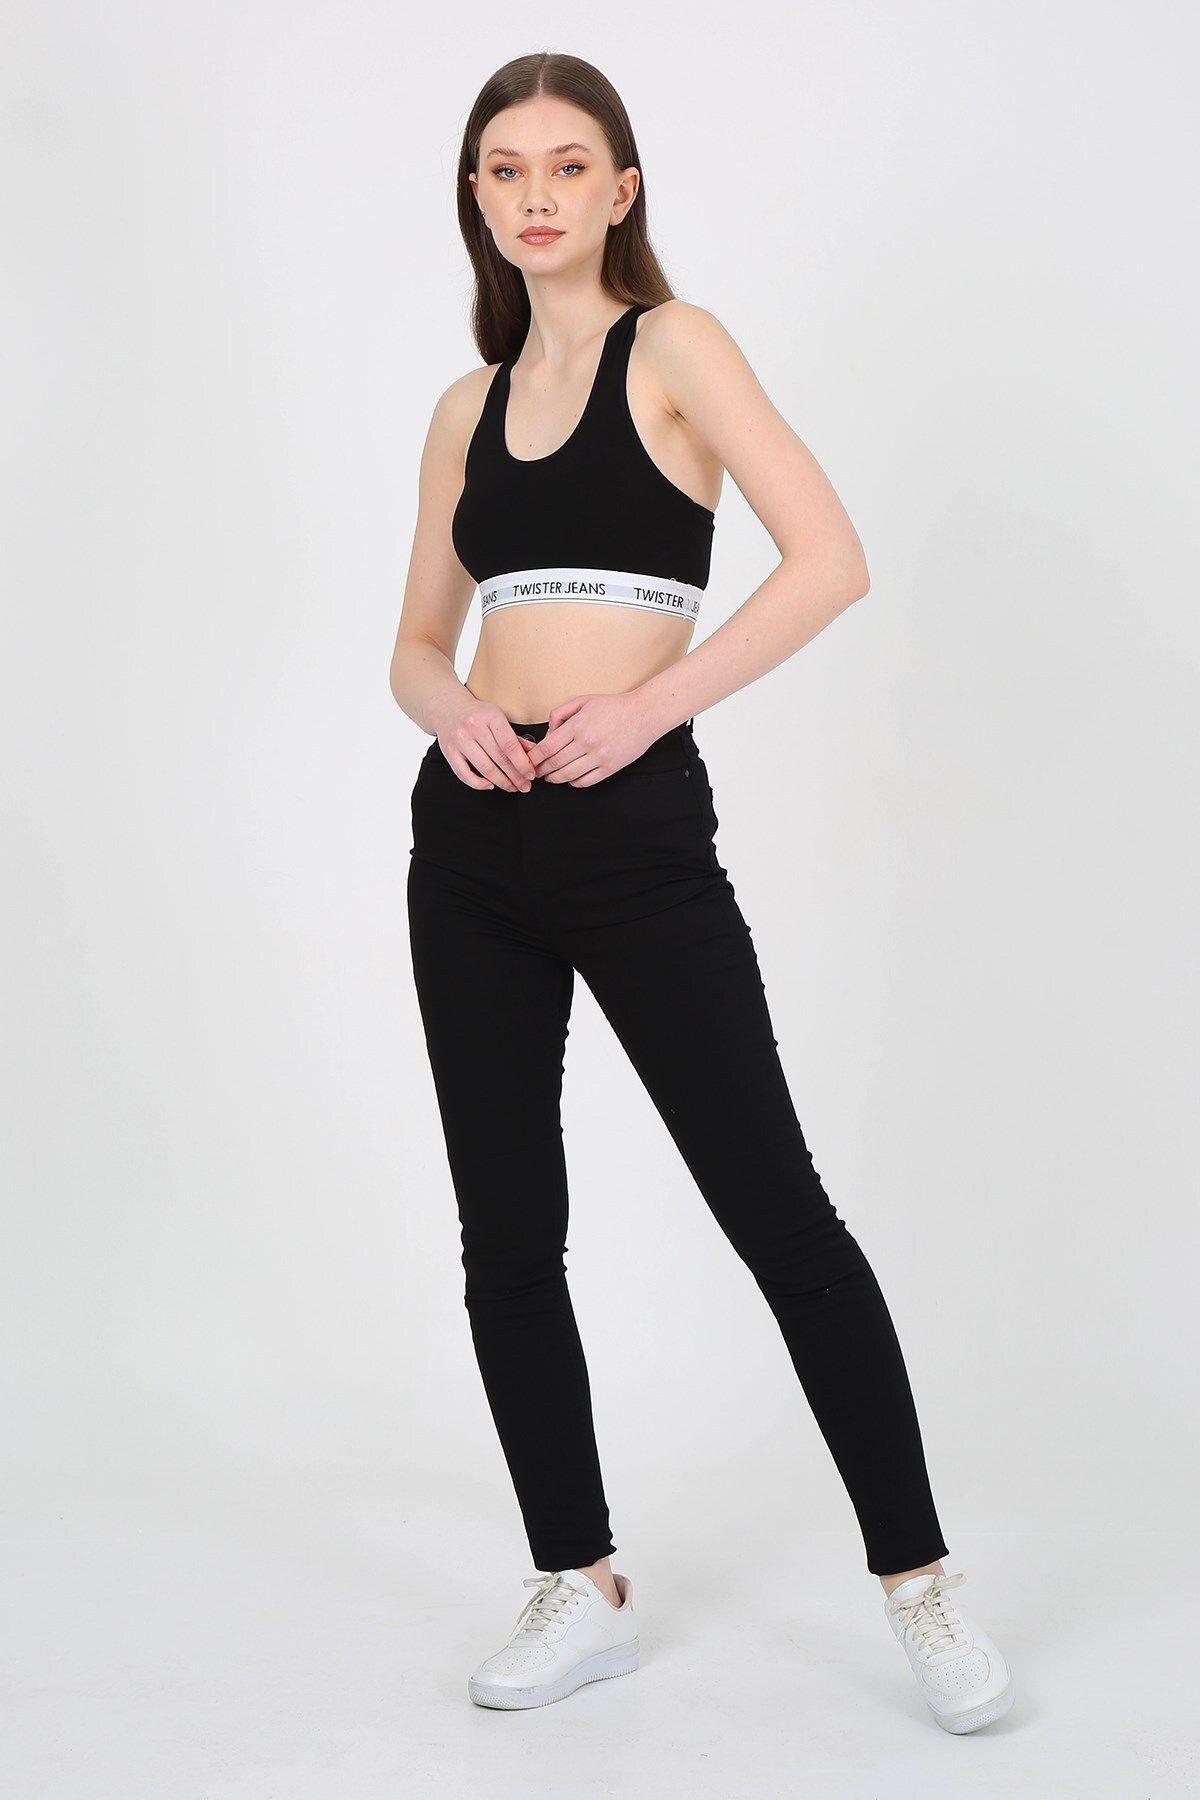 Twister Jeans Kadın Pantolon Lina 9407-01 Black